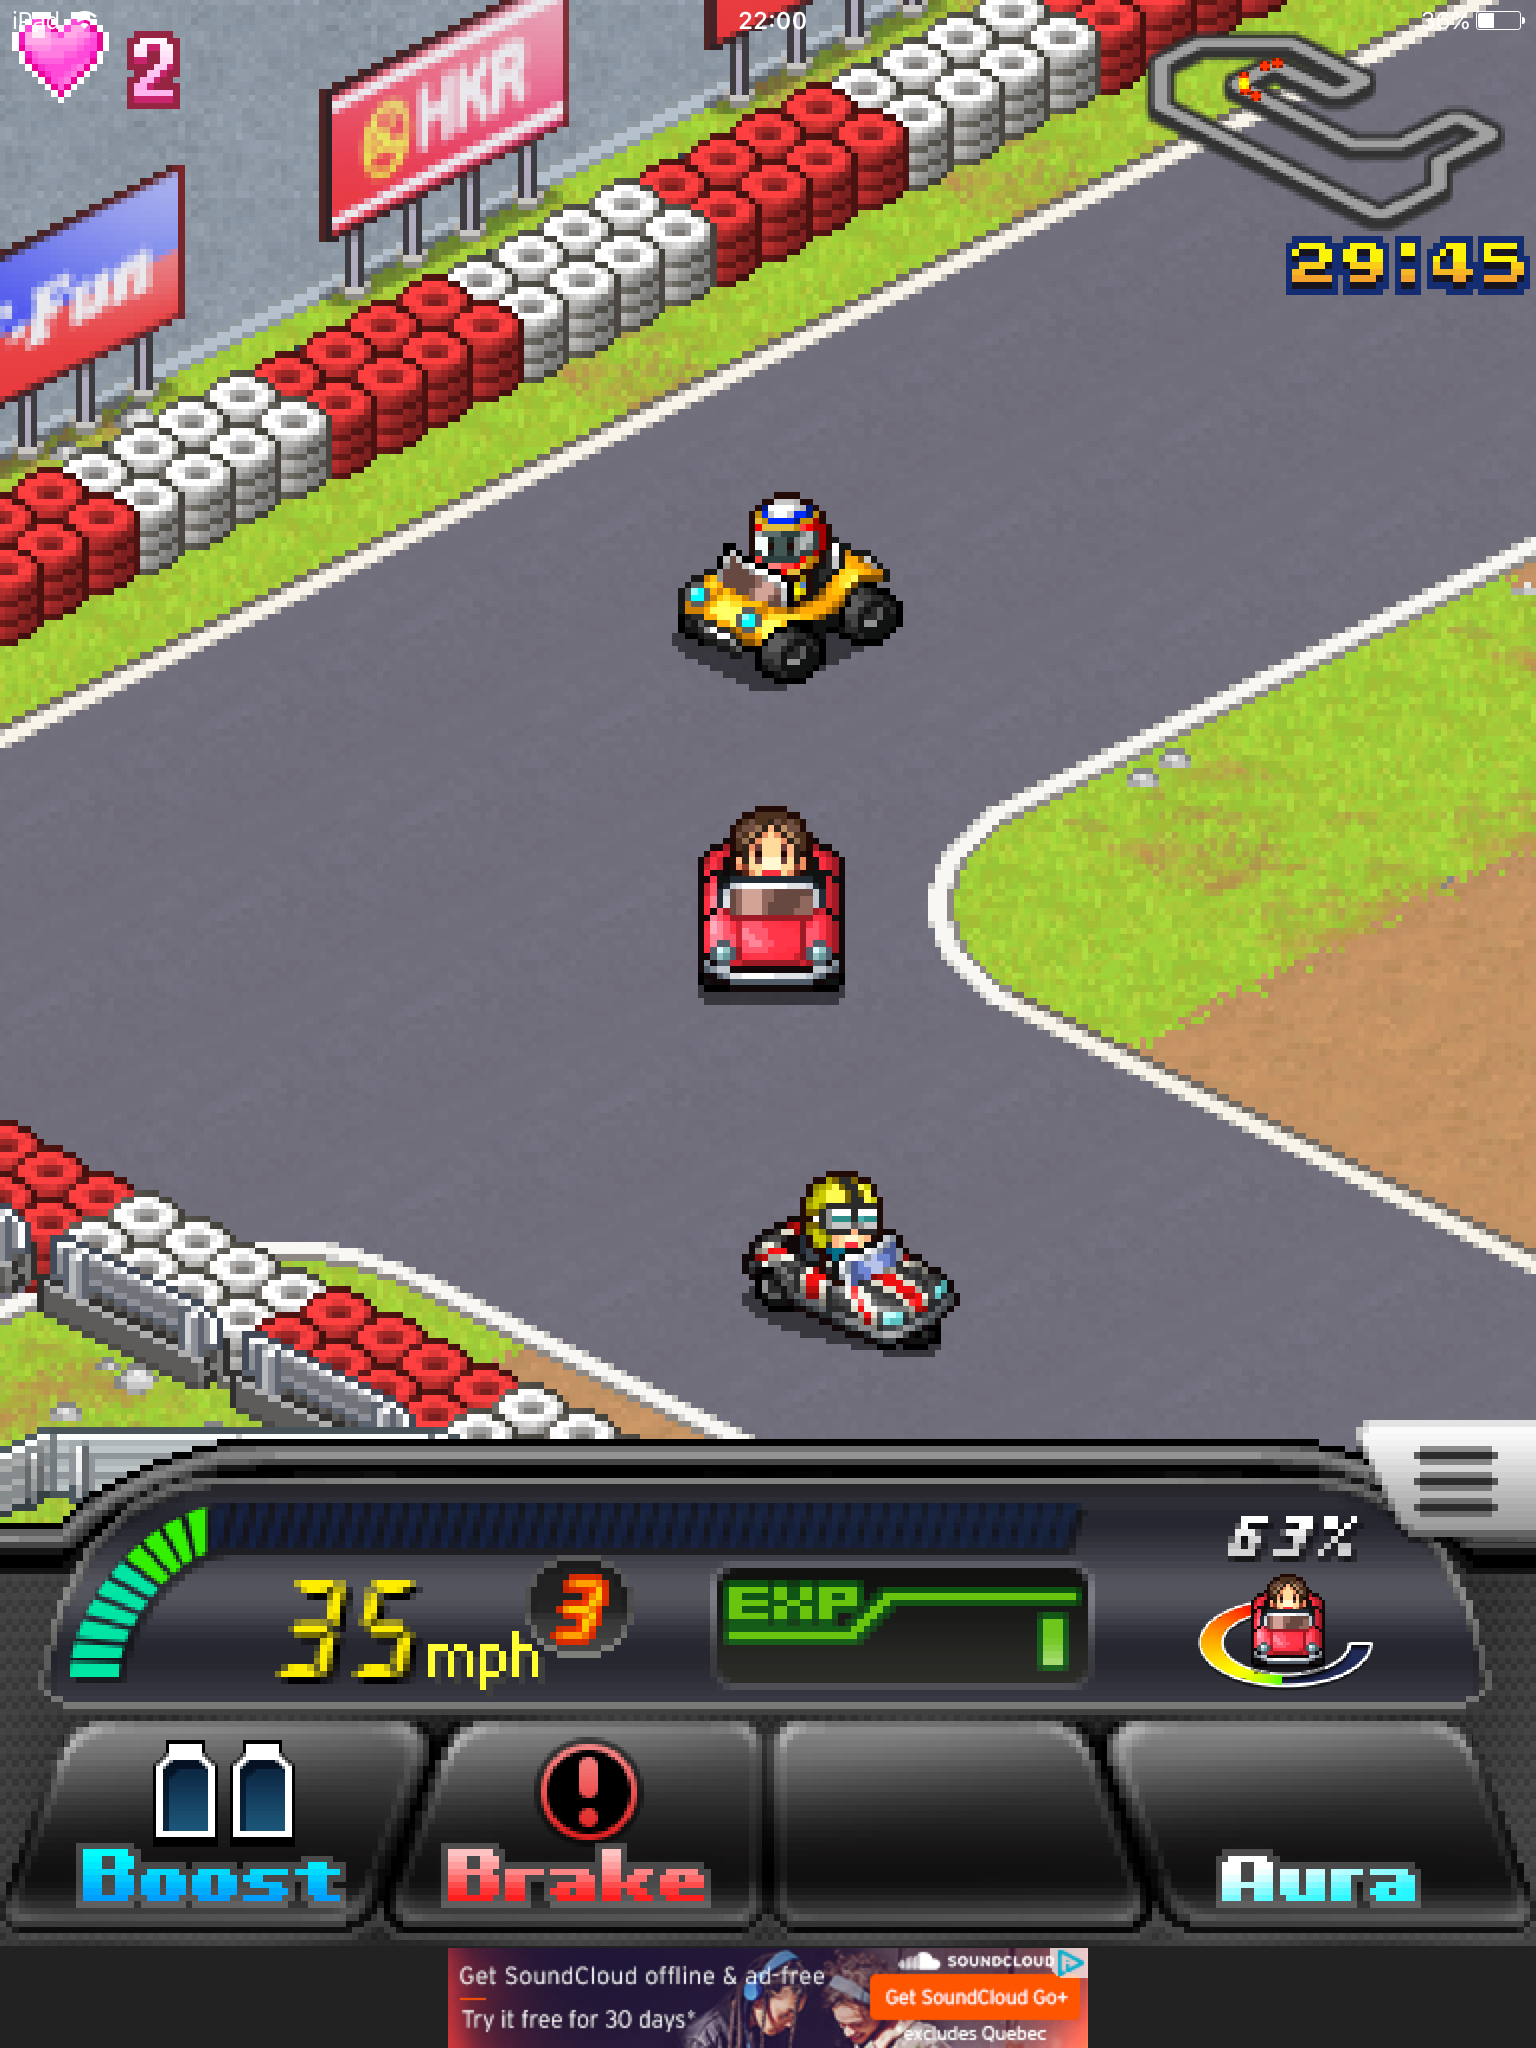 Grand Prix 2 Race